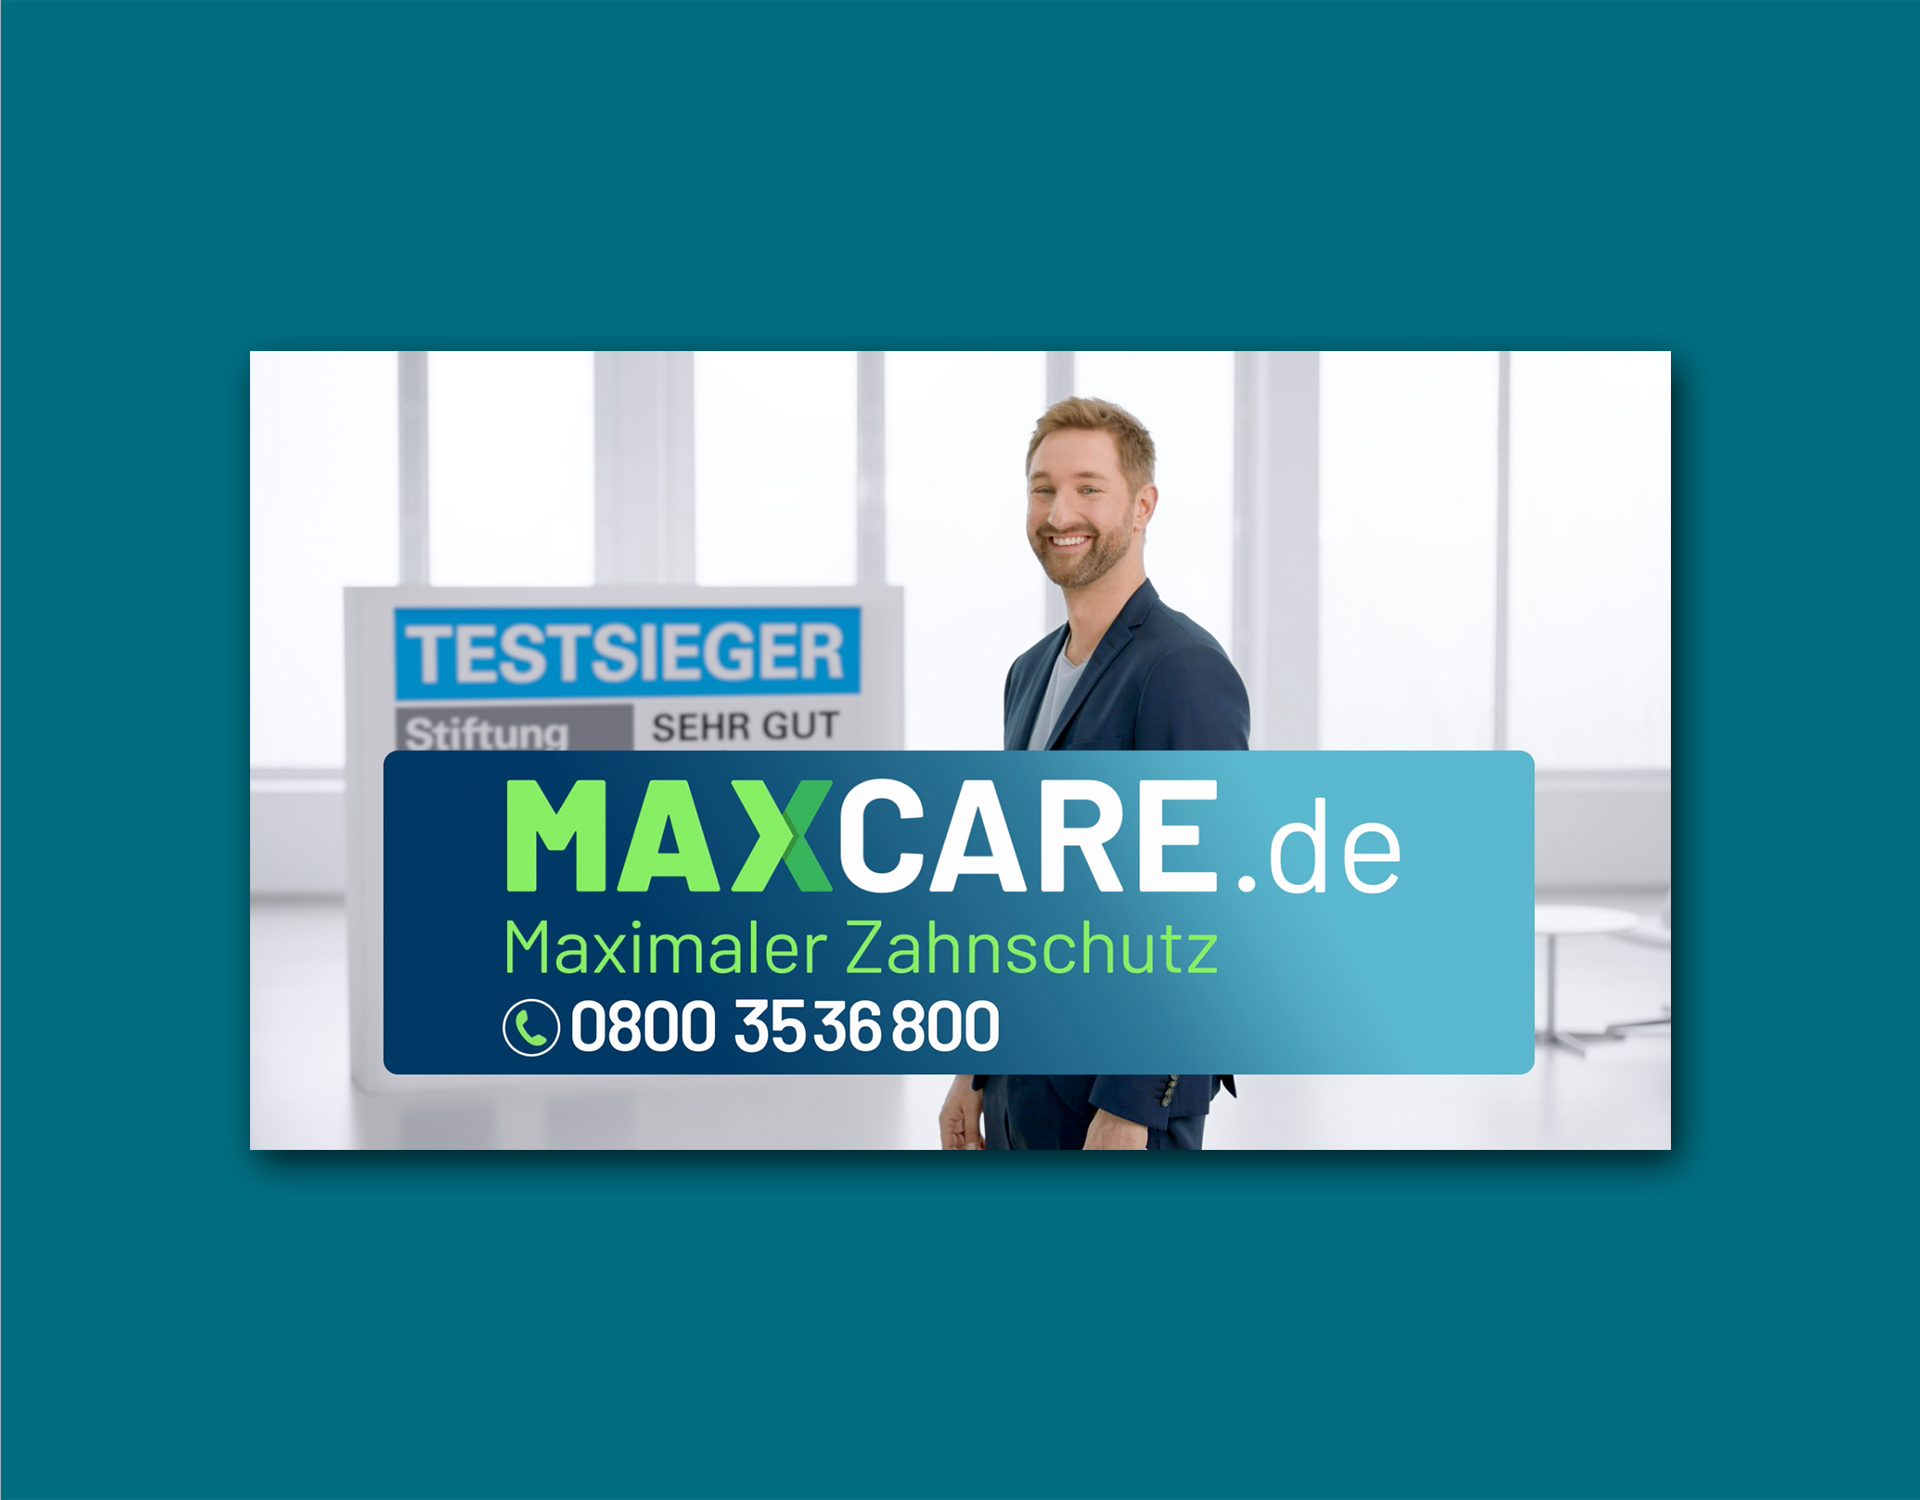 Maxcare – Testsieger